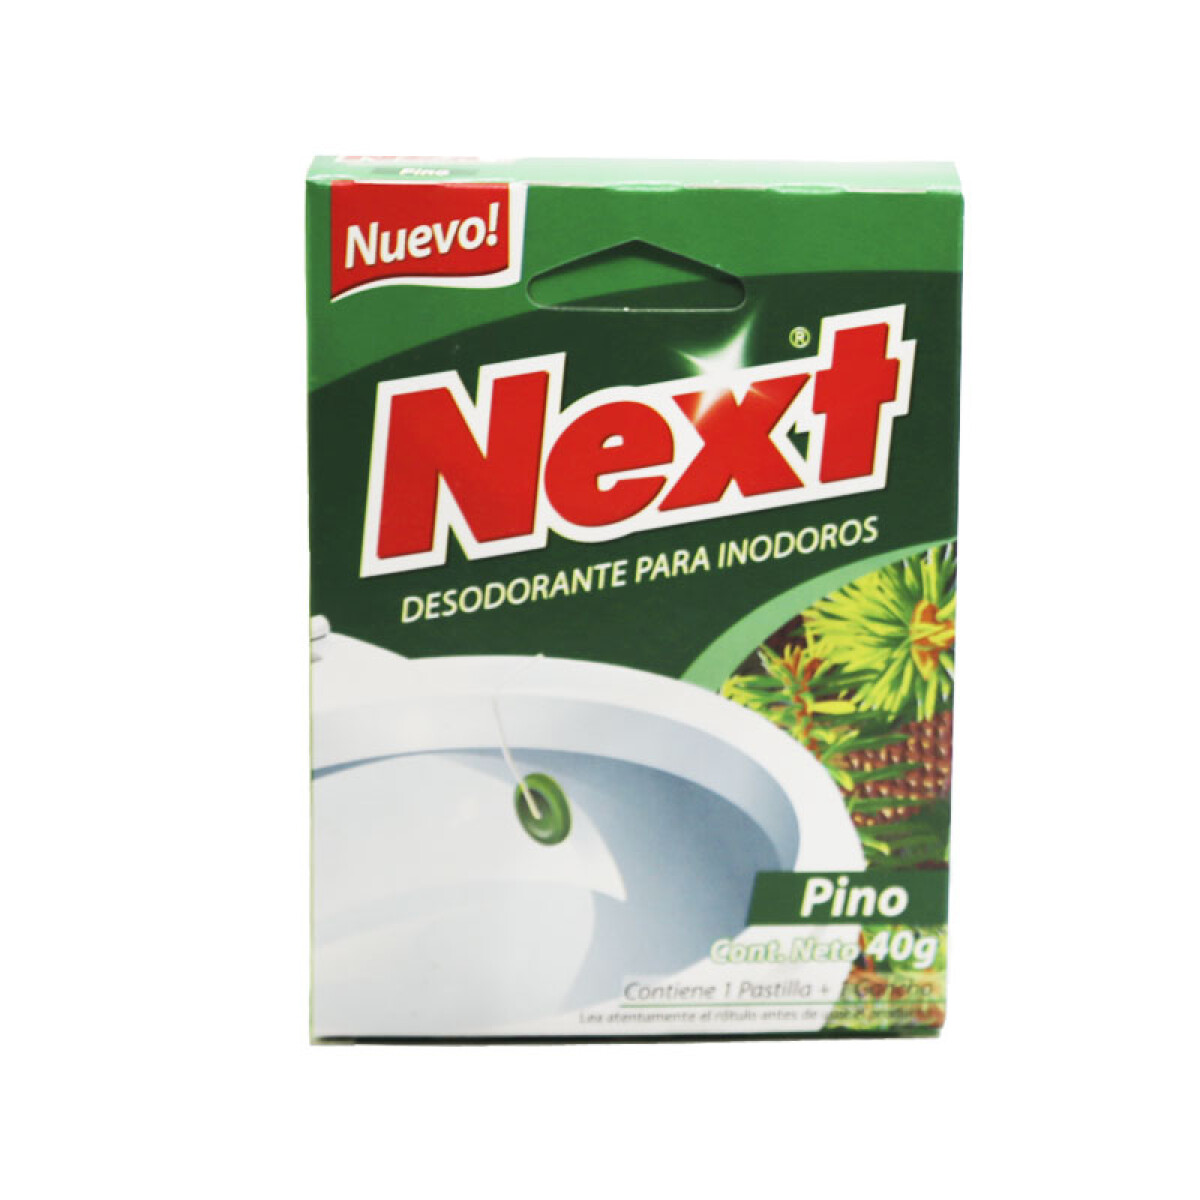 Pastilla Desodorante para Inodoro NEXT 40grs - Pino 